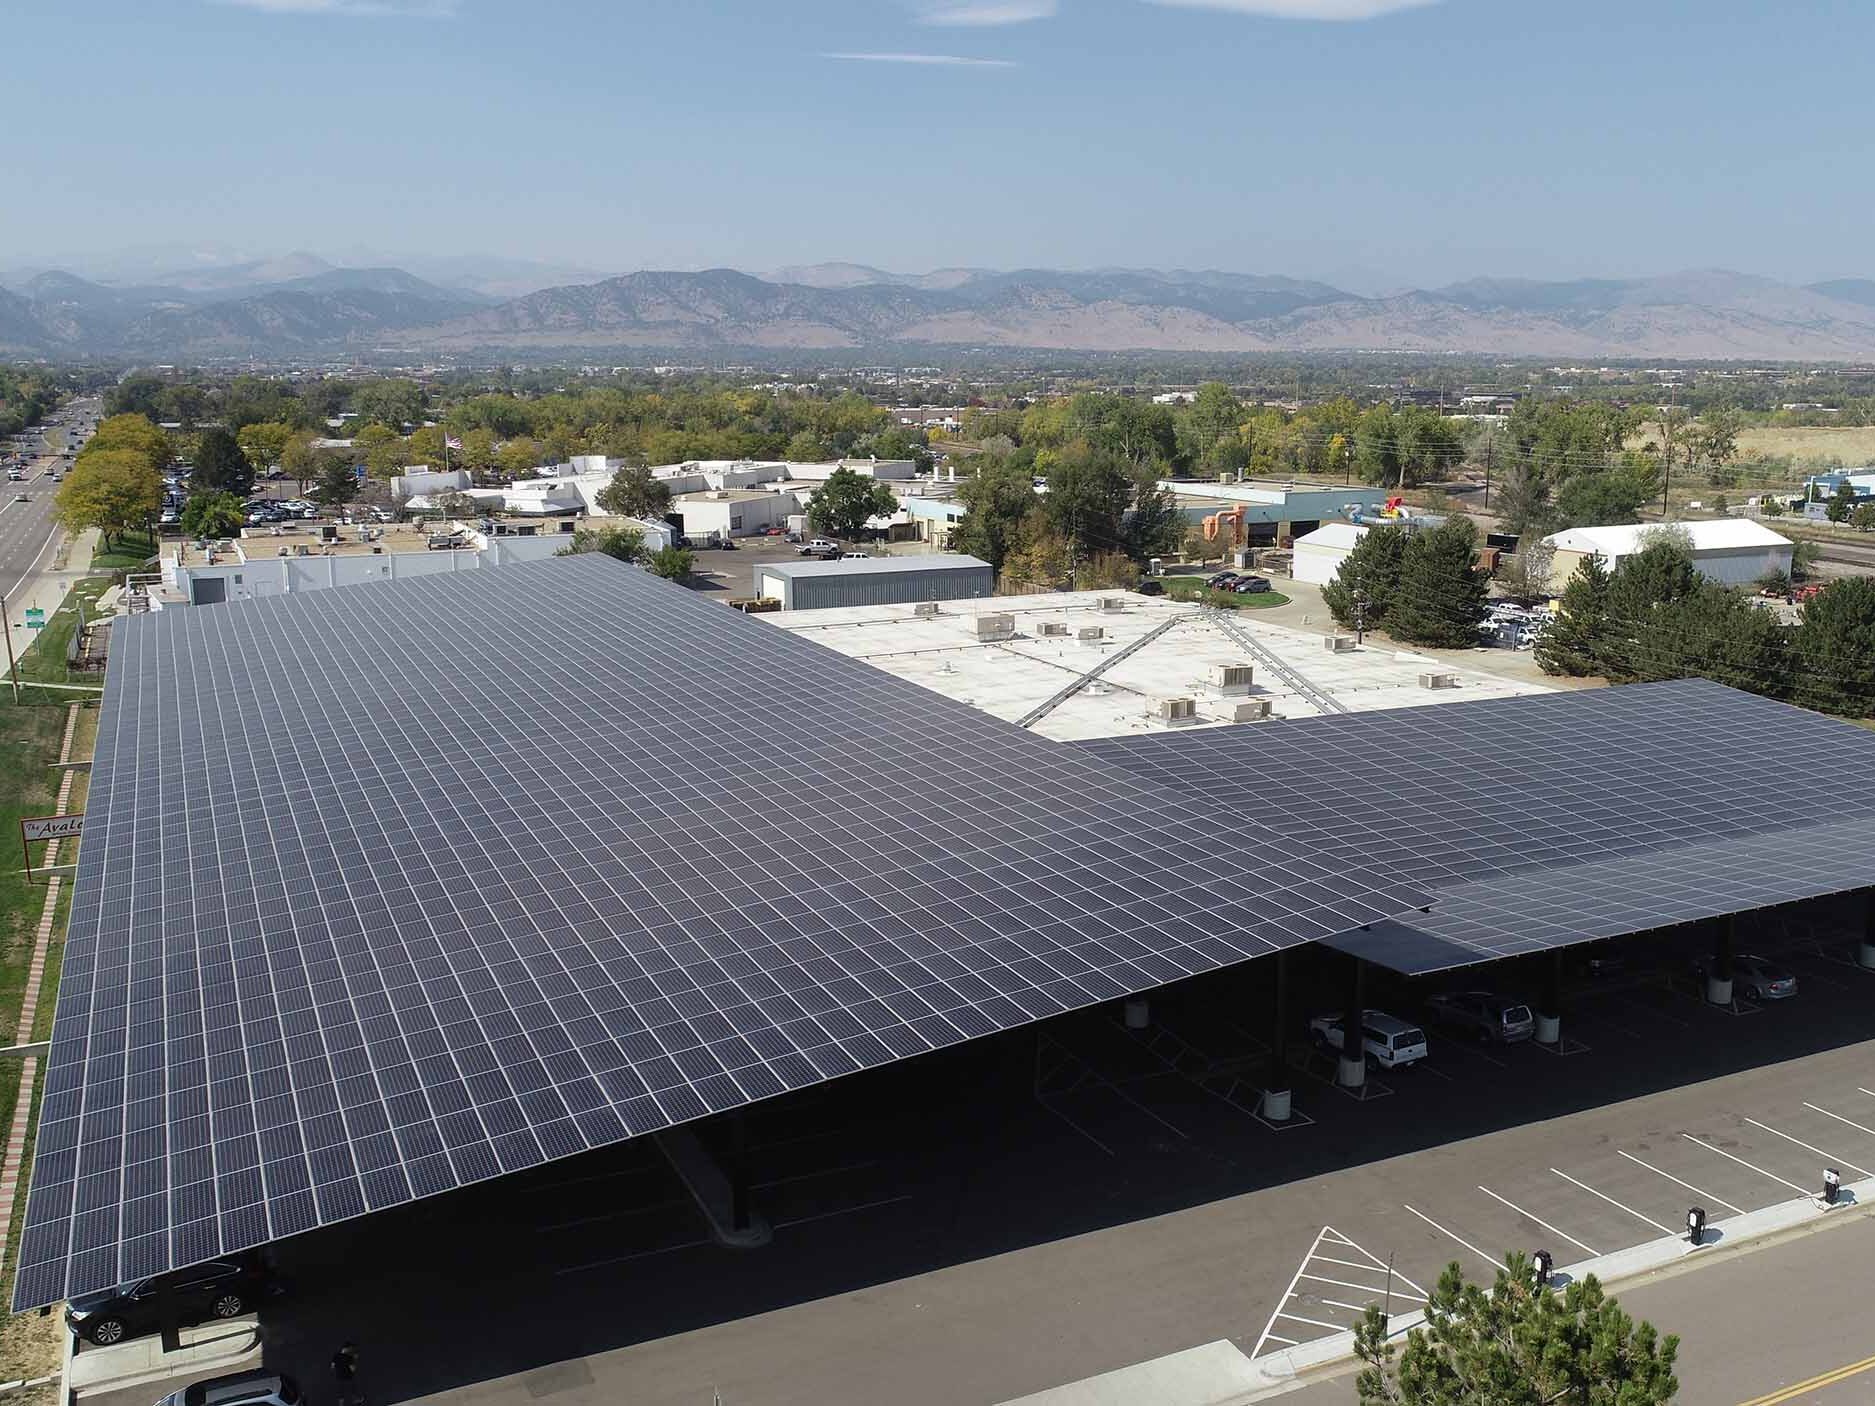 1.3 MW Solar Carport – Largest mono-slope carport in the US